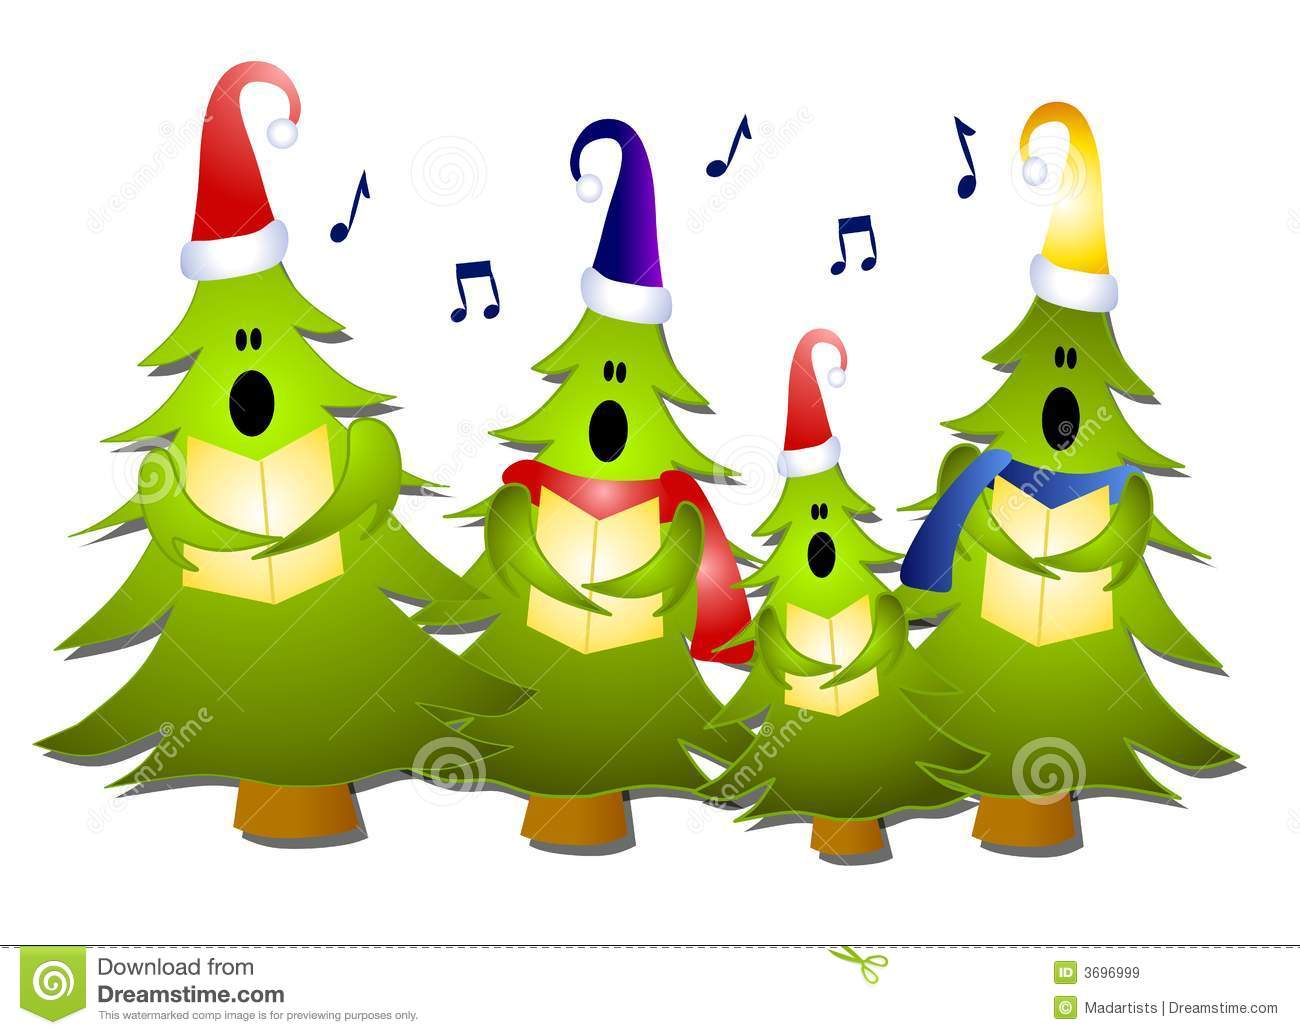 ... Christmas music - music n